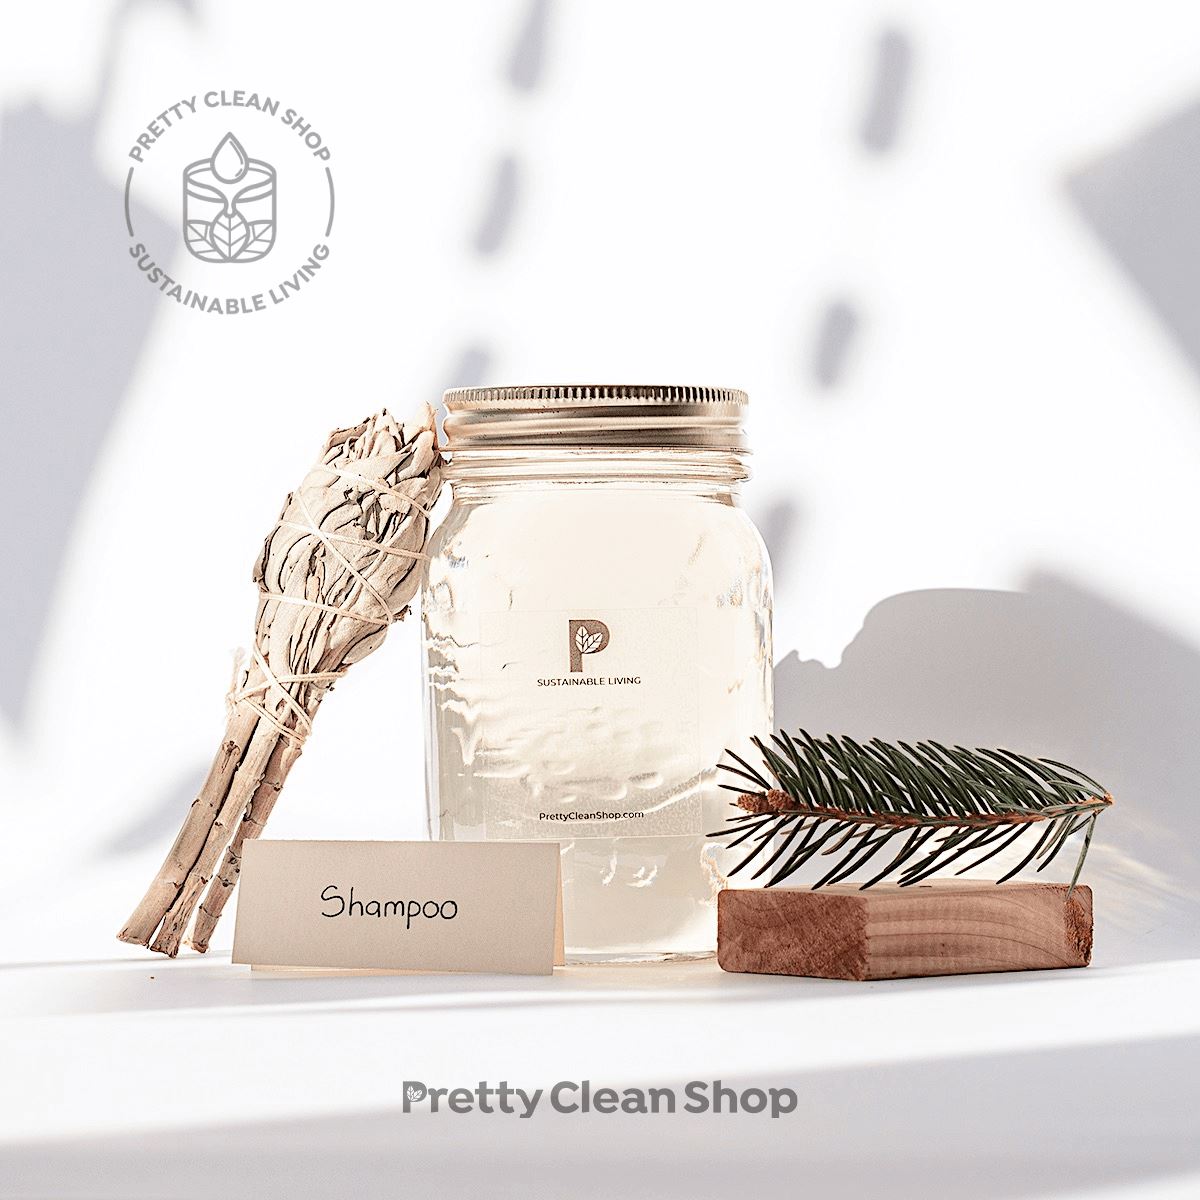 Oneka Shampoo - Cedar & Sage Hair oneka 500ml glass jar (REFILLABLE, includes $1.25 deposit) Prettycleanshop